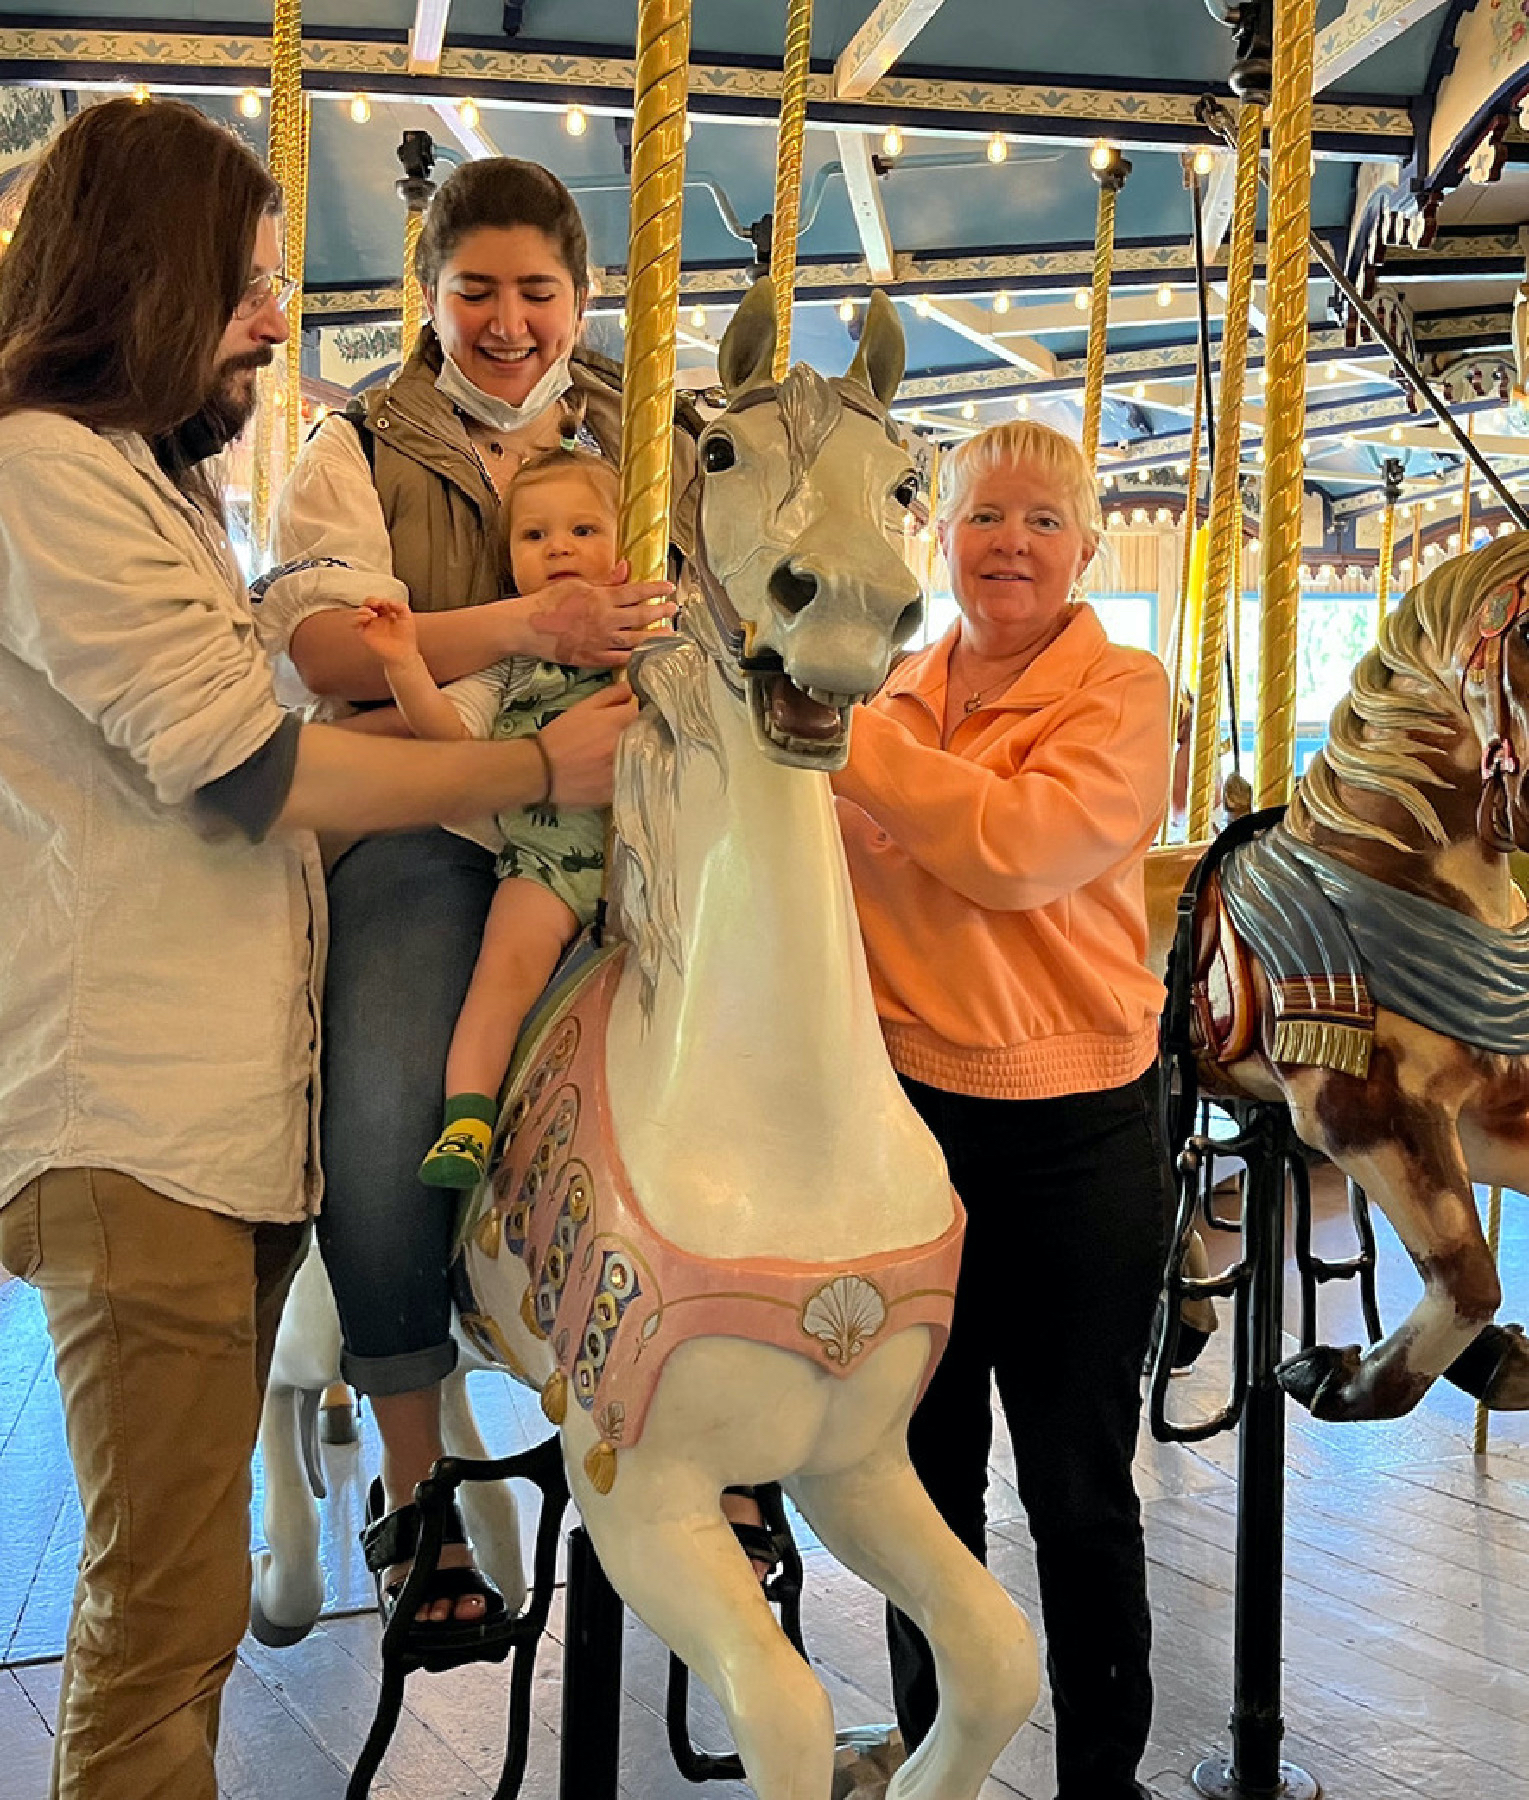 A family enjoys the carousel at Peddler’s Village in Lahaska, Pennsylvania.